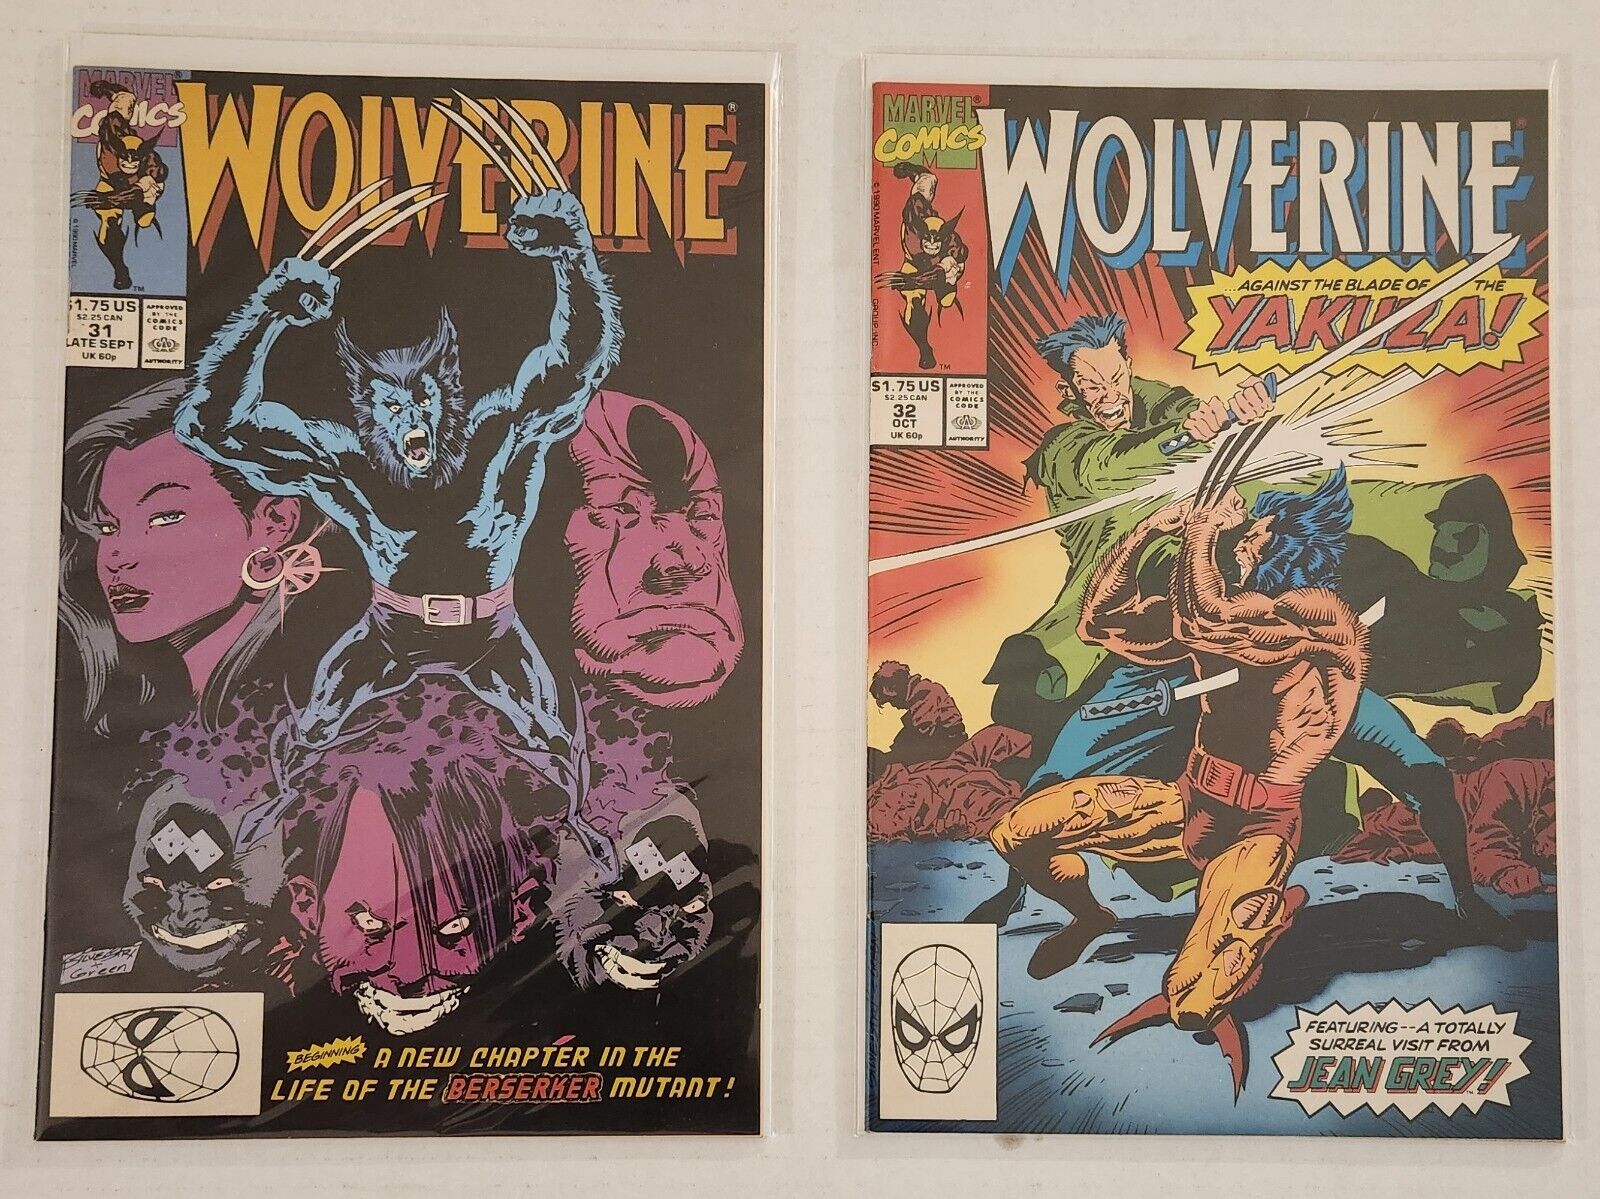 Wolverine (vol. 2) #31-40 (Marvel Comics 1990-1991) 10 issue run